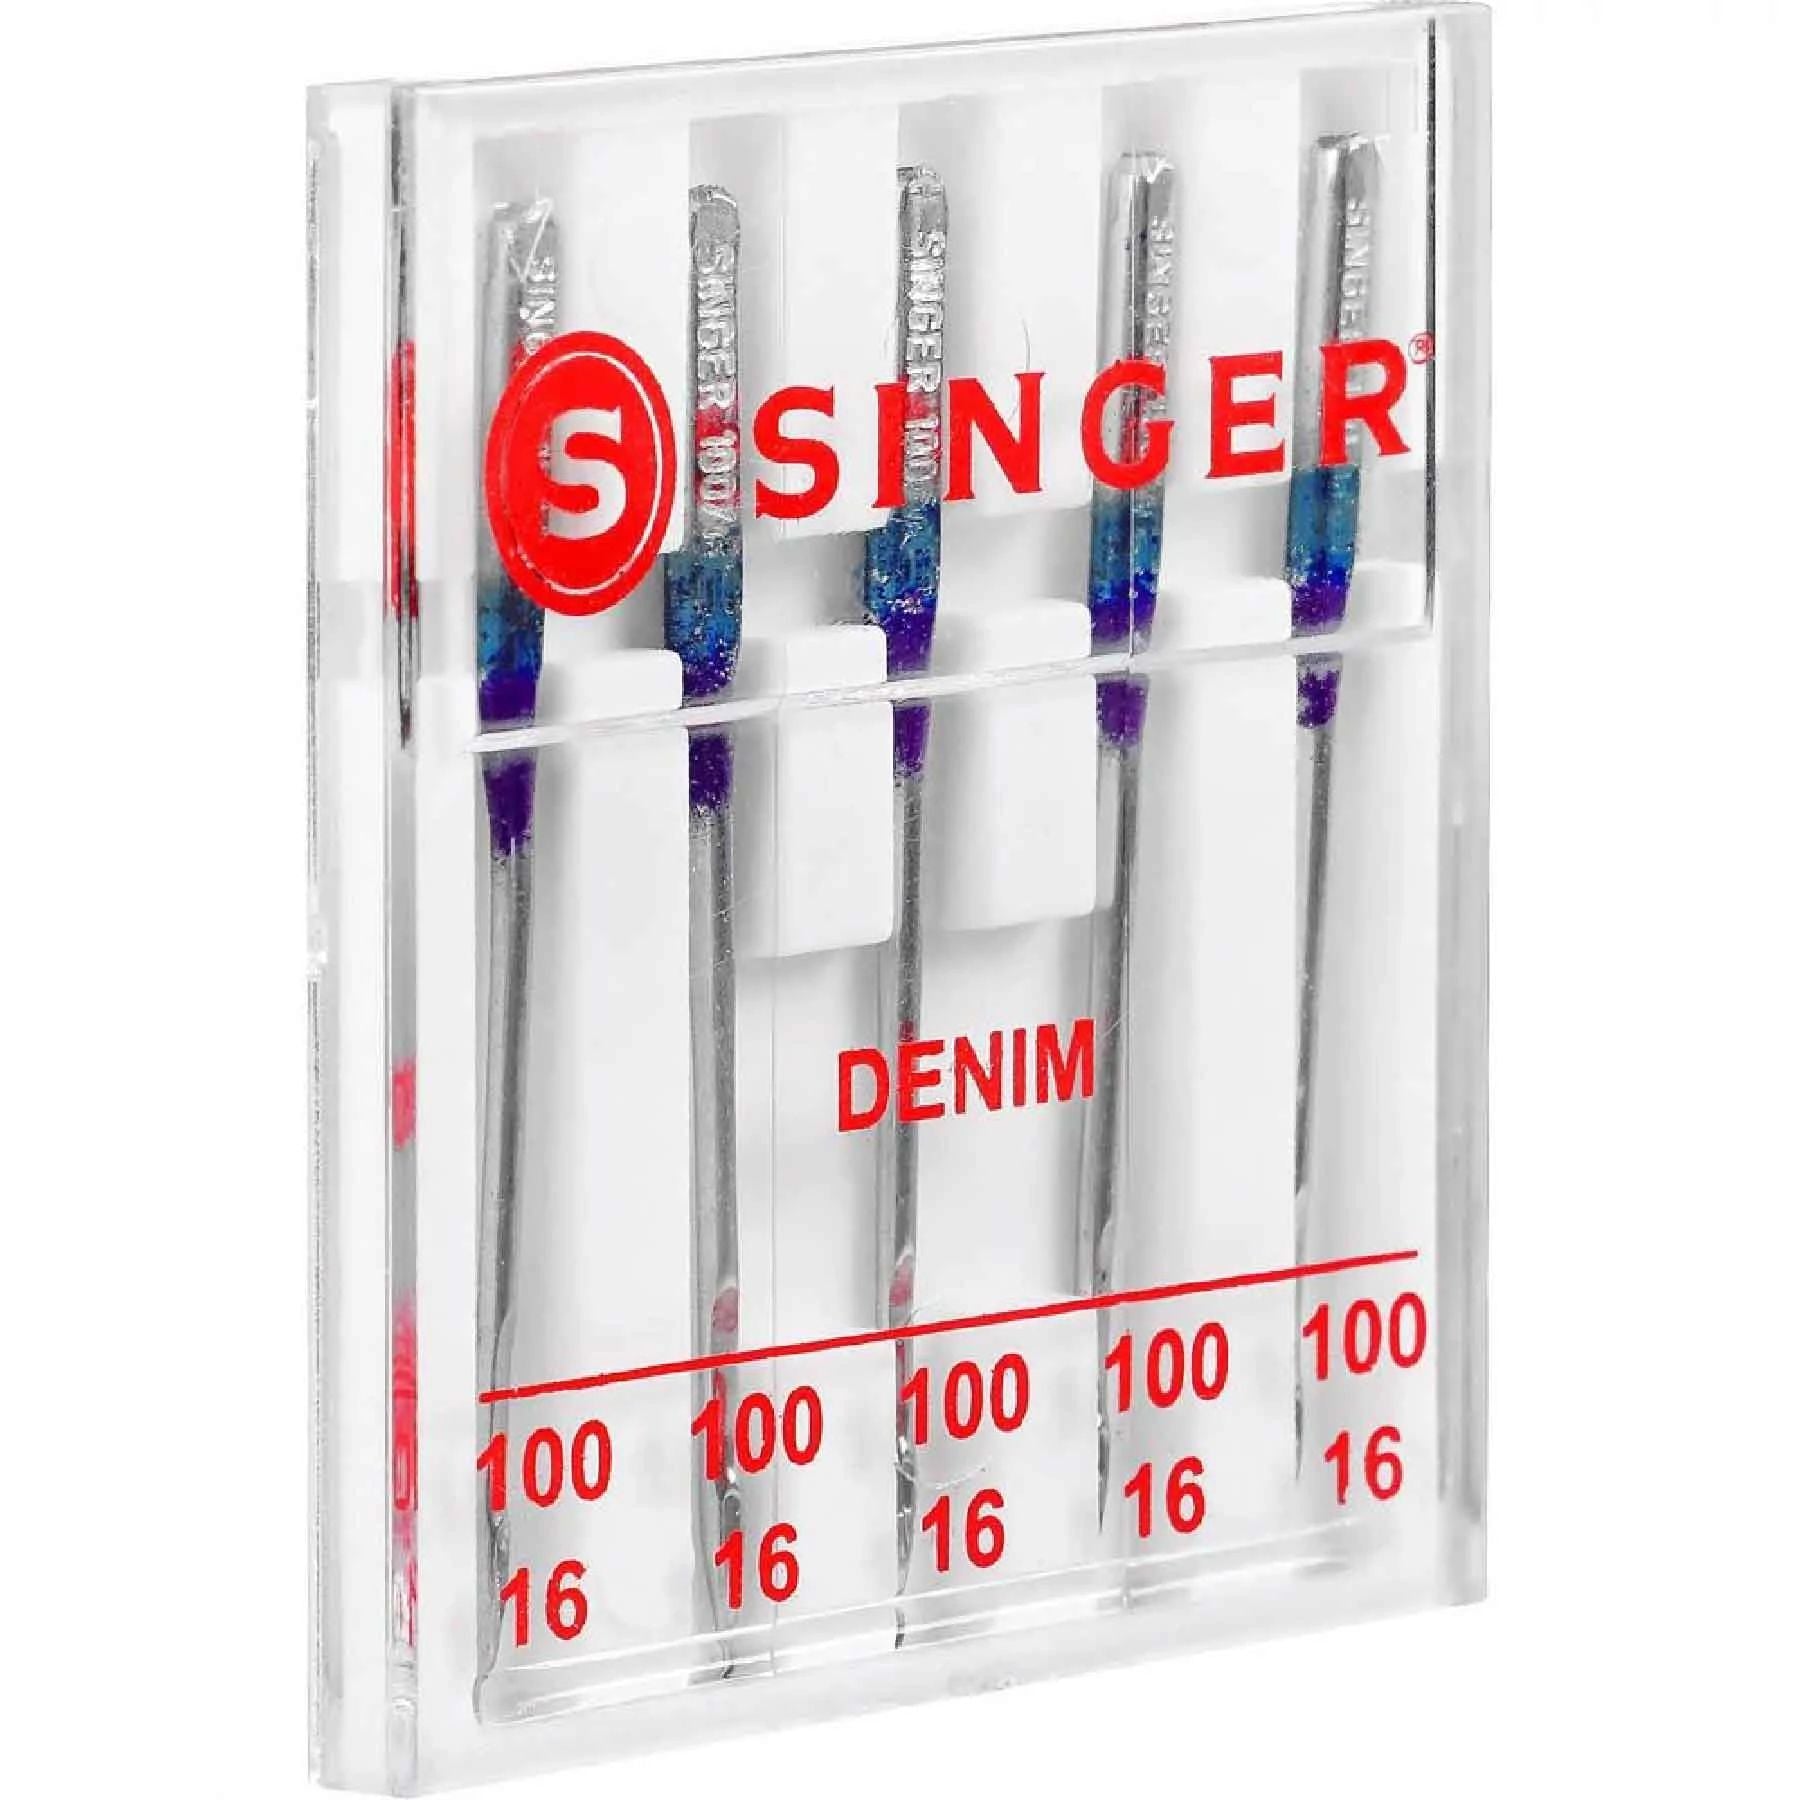 Buy Denim Needle For Sewing Machine online, Denim Needle For Sewing Machine